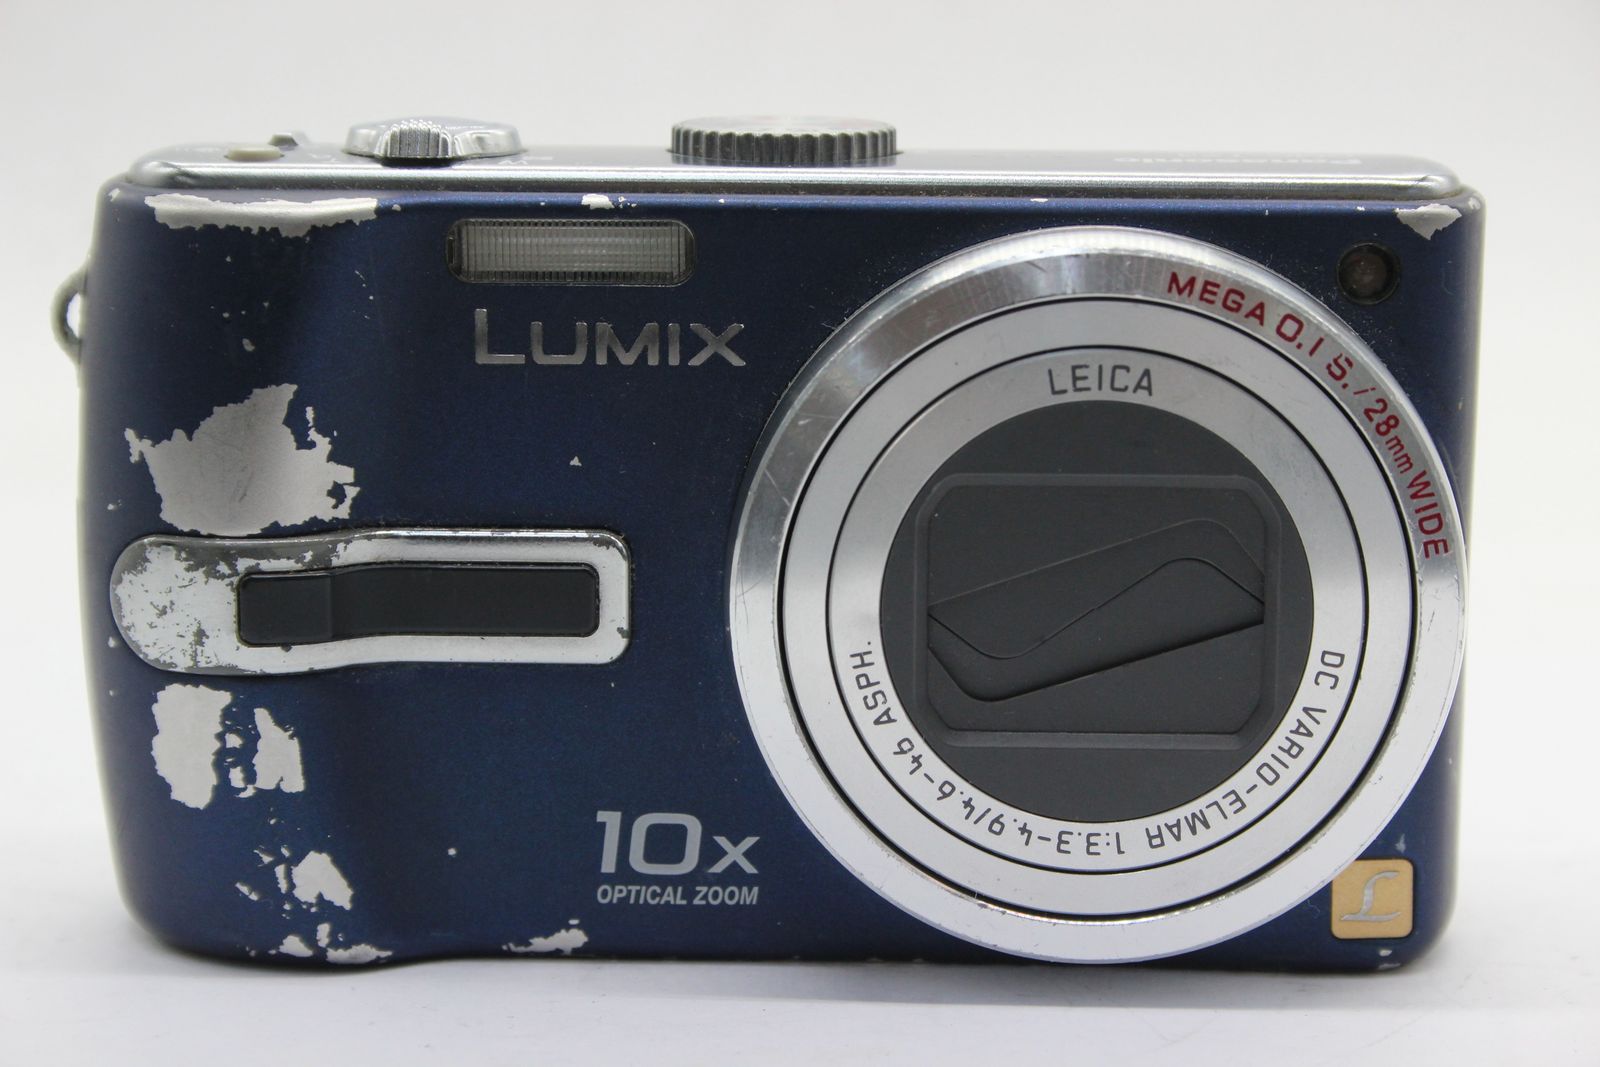 Panasonic 【返品保証】 パナソニック Panasonic LUMIX DMC-TZ3 ブルー 10x バッテリー チャージャー付き コンパクトデジタルカメラ s5401